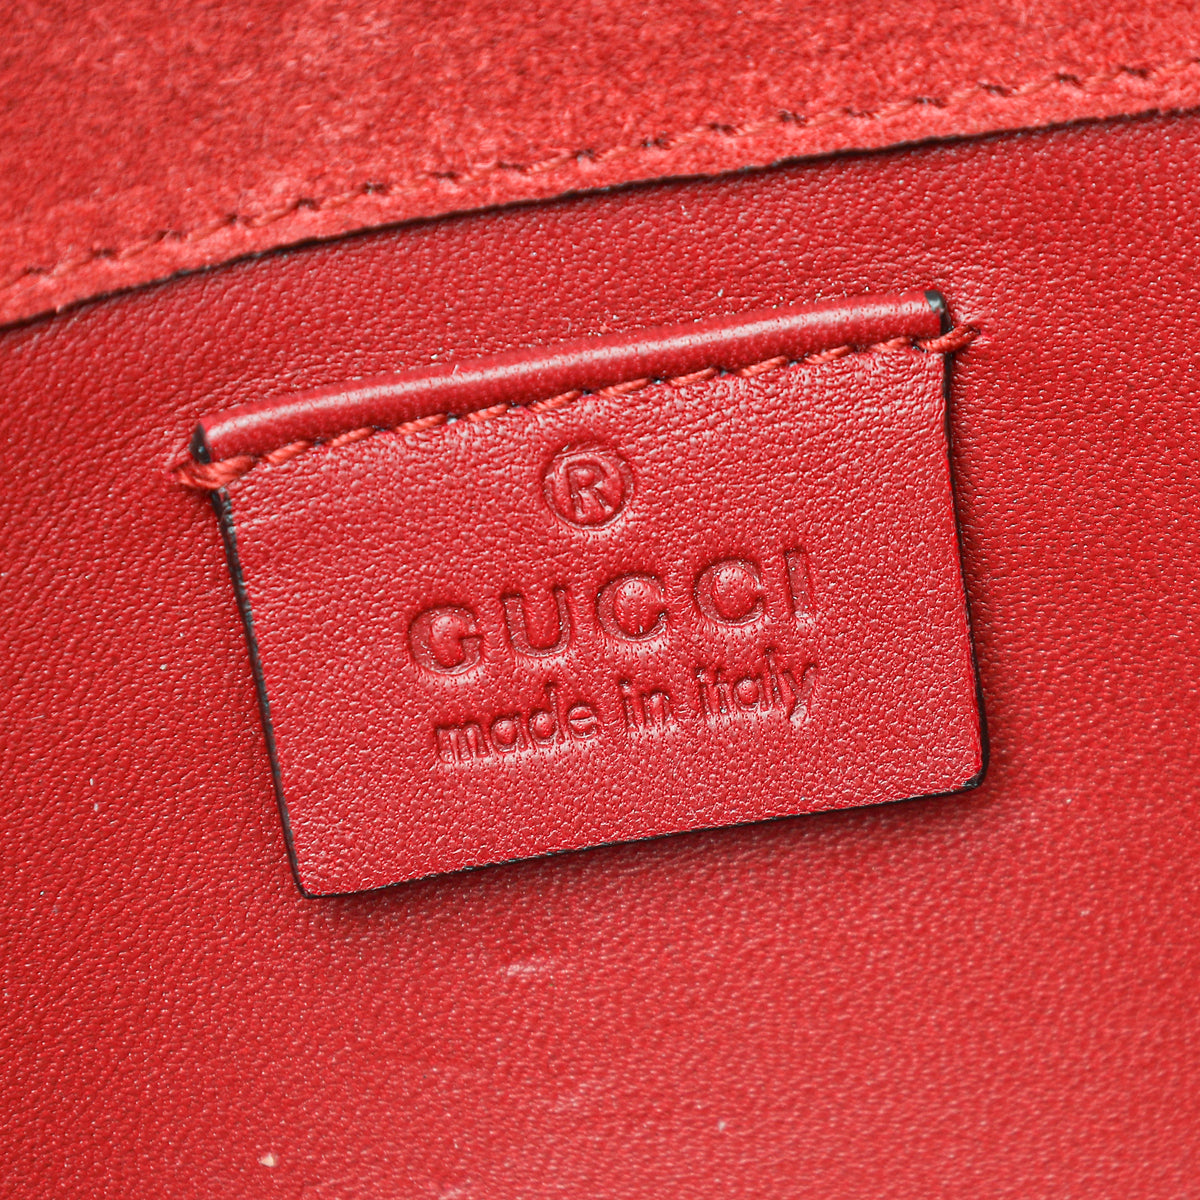 Gucci Red Microguccissima Broadway Clutch